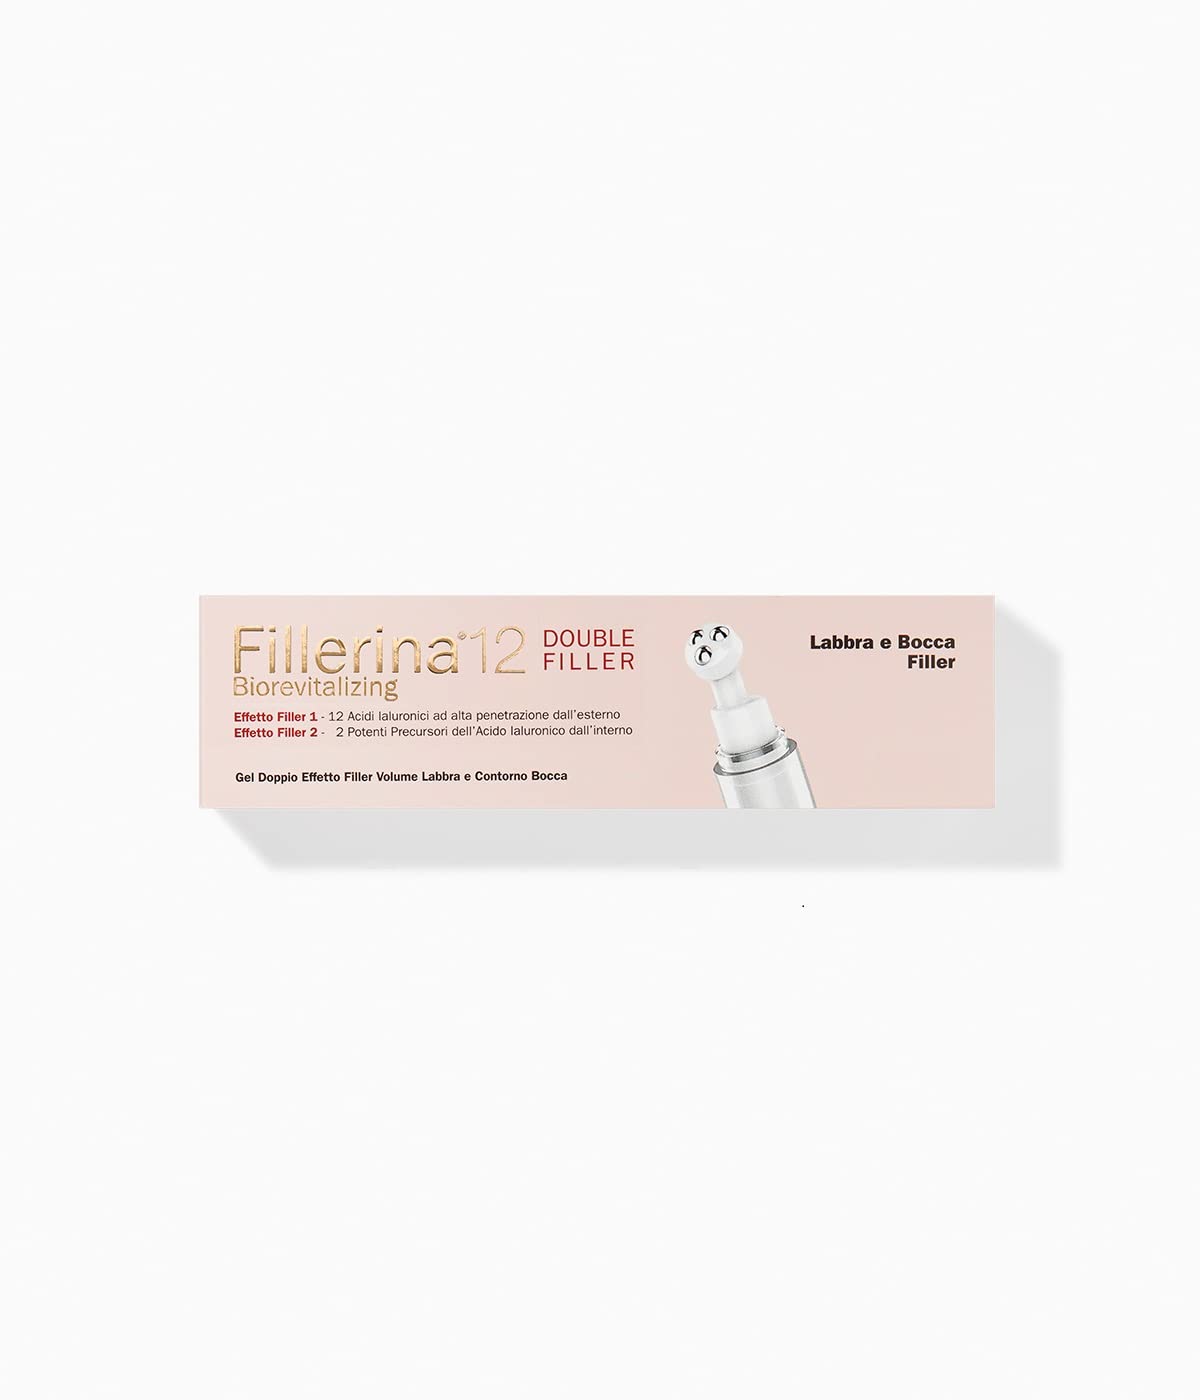 Labo Fillerina 12 Biorevitalizing Double Filler Lippen und Mund Revitalisierendes Anti-Falten-Gel Lip and Mouth Gr. 4 7ml